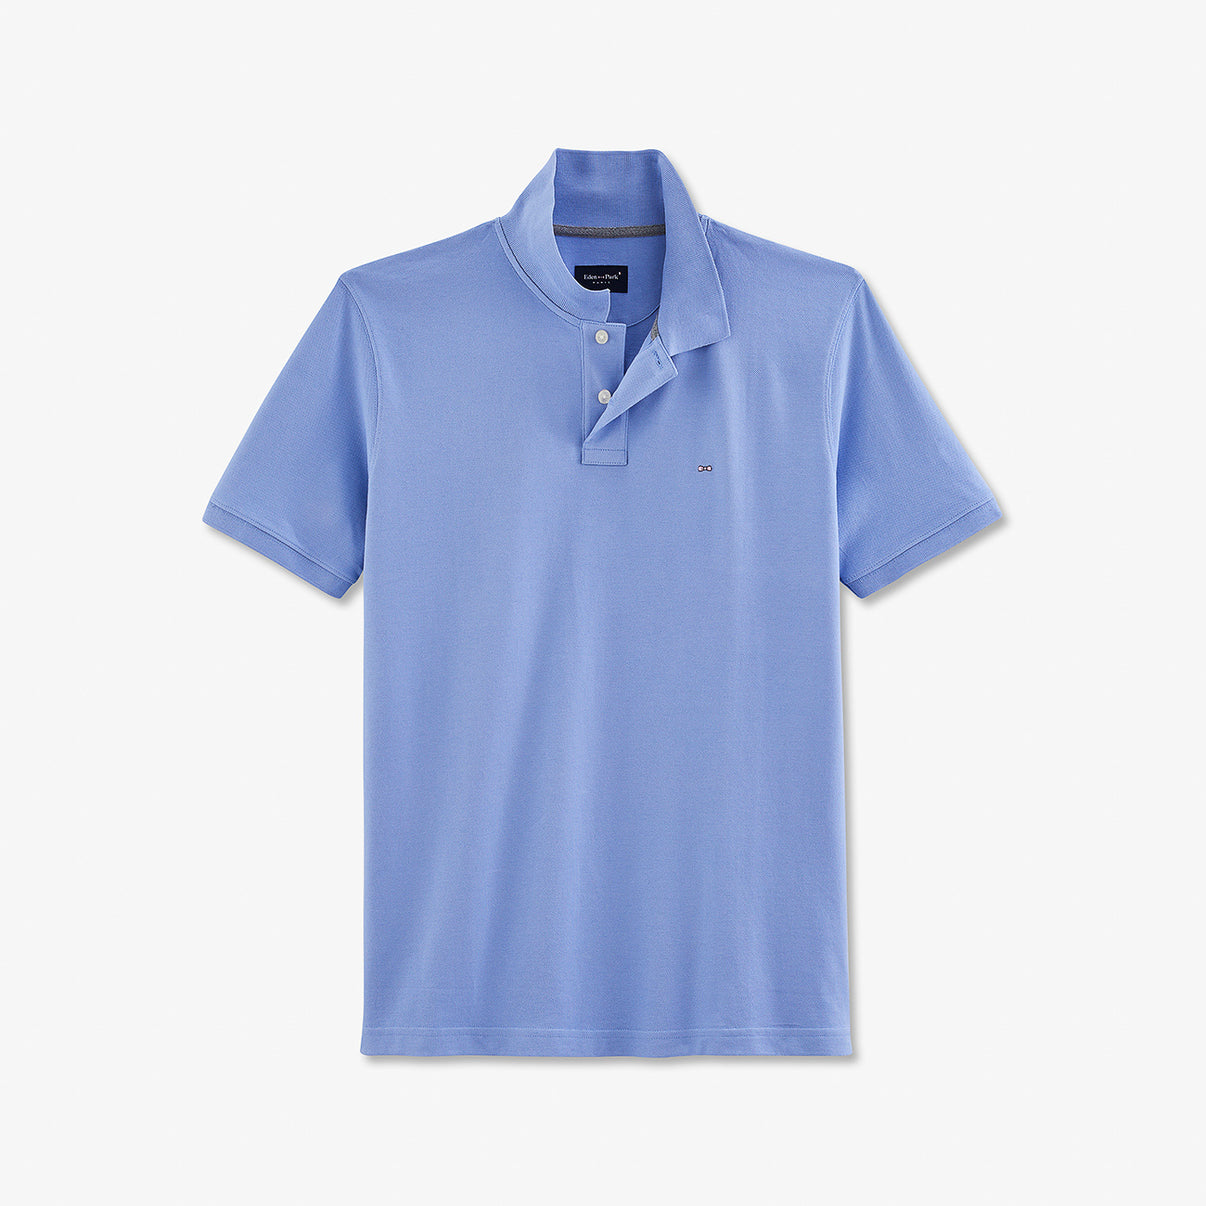 Eden Park Polo Shirt In Regular Fit.  Light Blue  - The Short Sleeve Classic Polo.